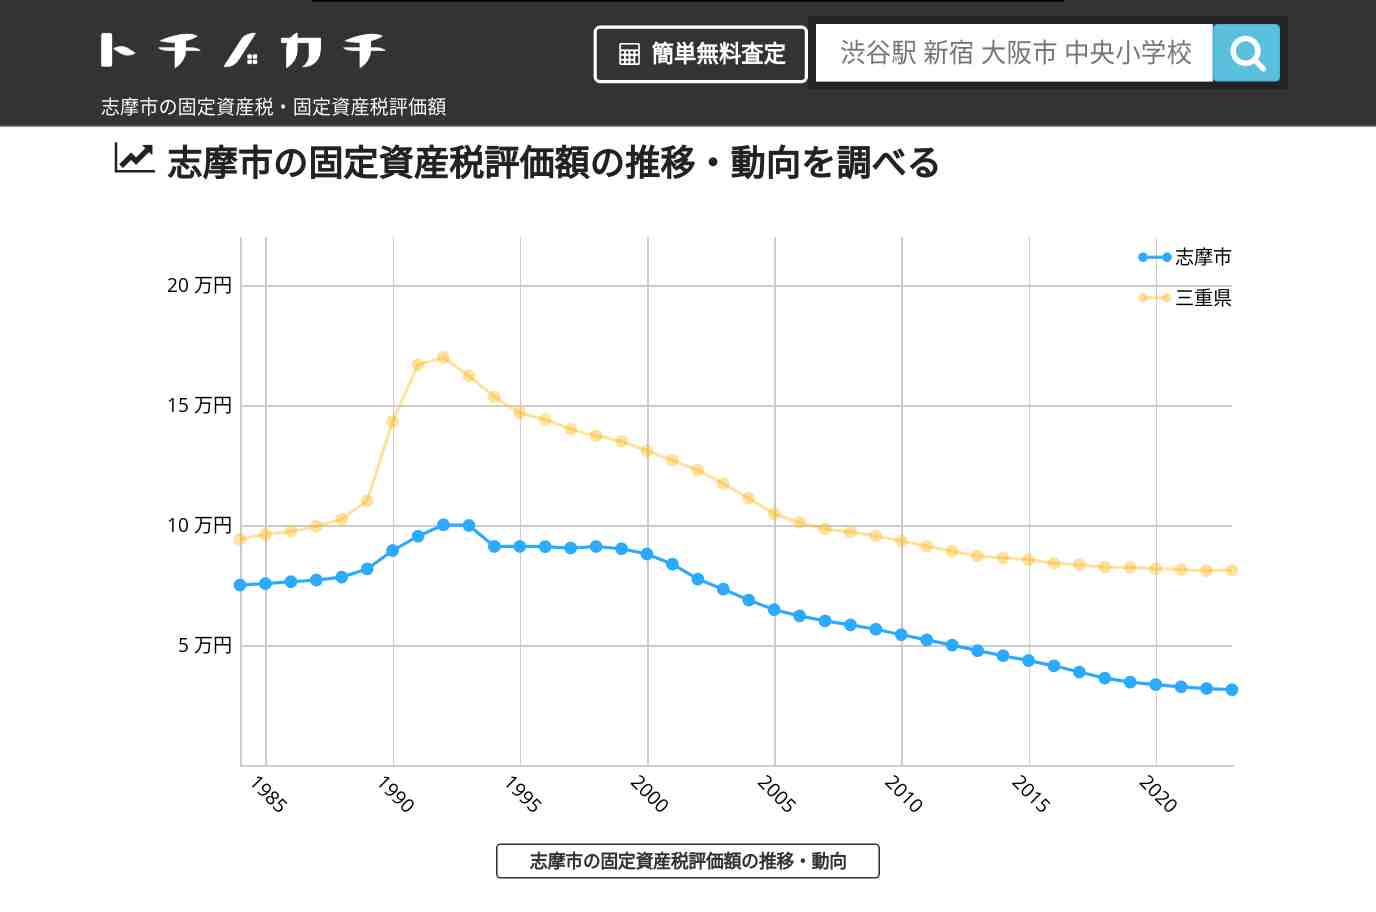 安乗小学校(三重県 志摩市)周辺の固定資産税・固定資産税評価額 | トチノカチ